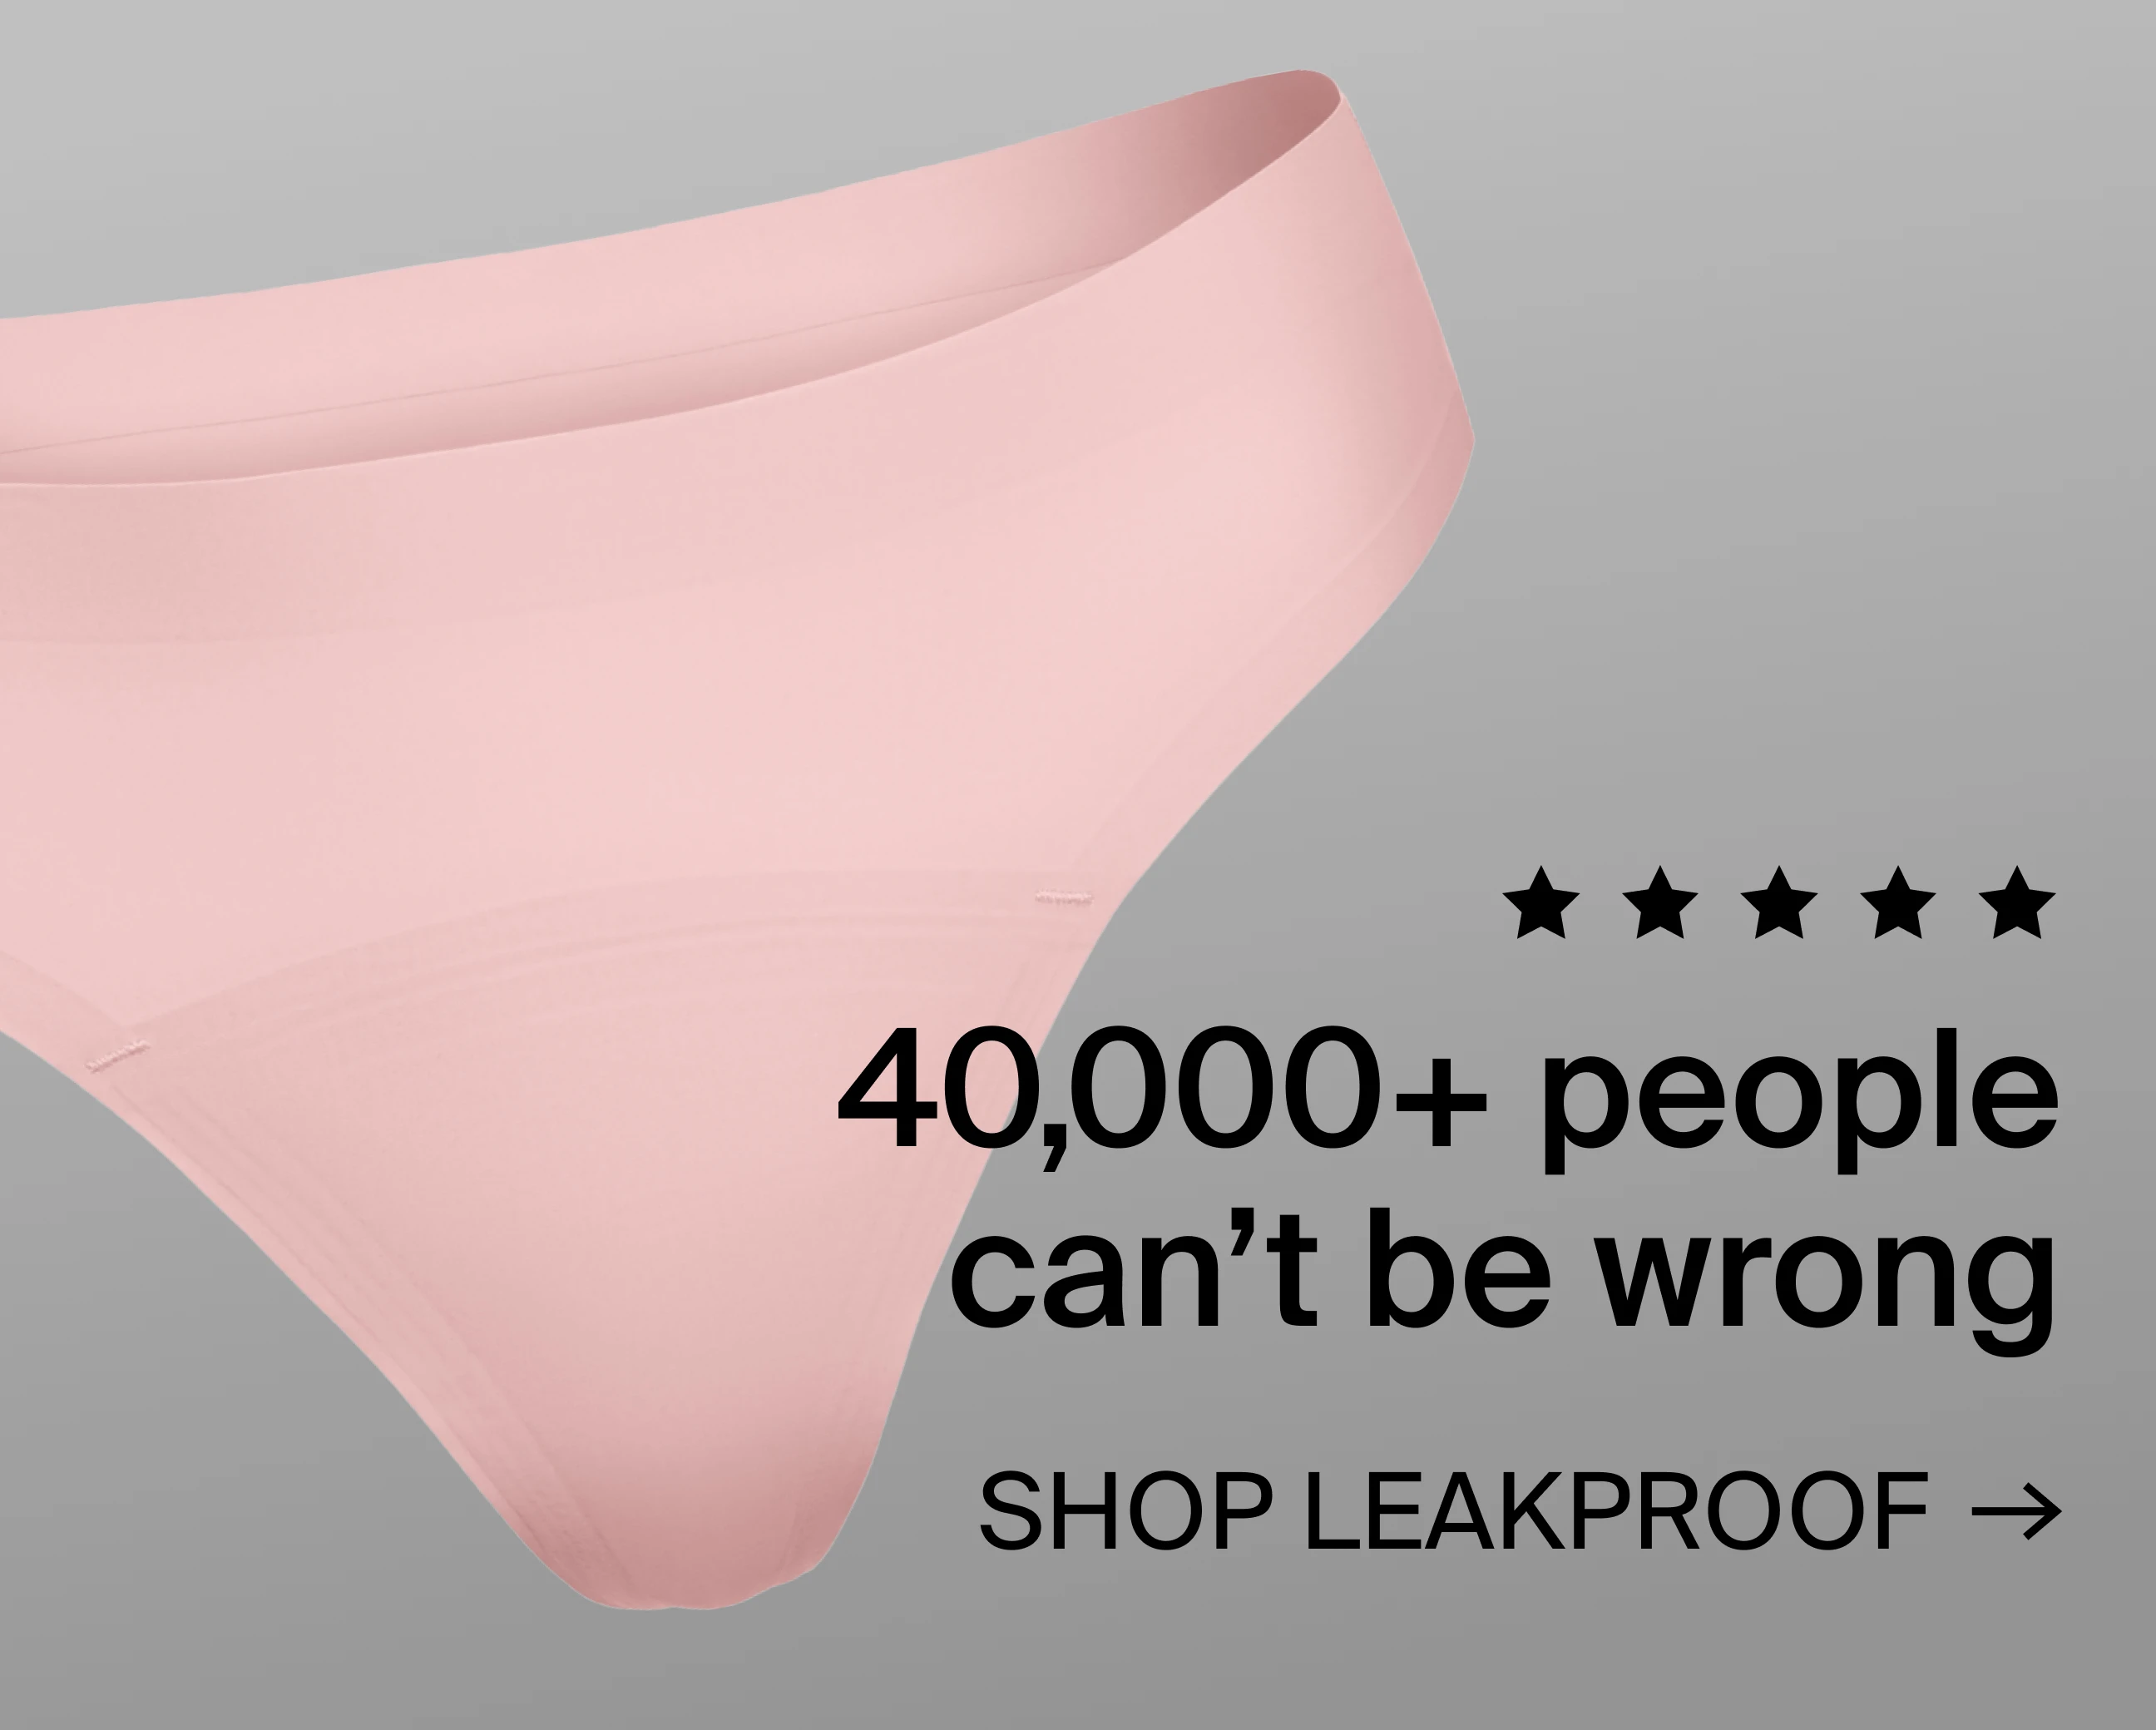 Generic Seamless 4-Layer Leakproof Menstrual Period Panties Heavy Flow Mesh  Briefs Fast Absorbent Panties Plus Size Briefs 3xl @ Best Price Online